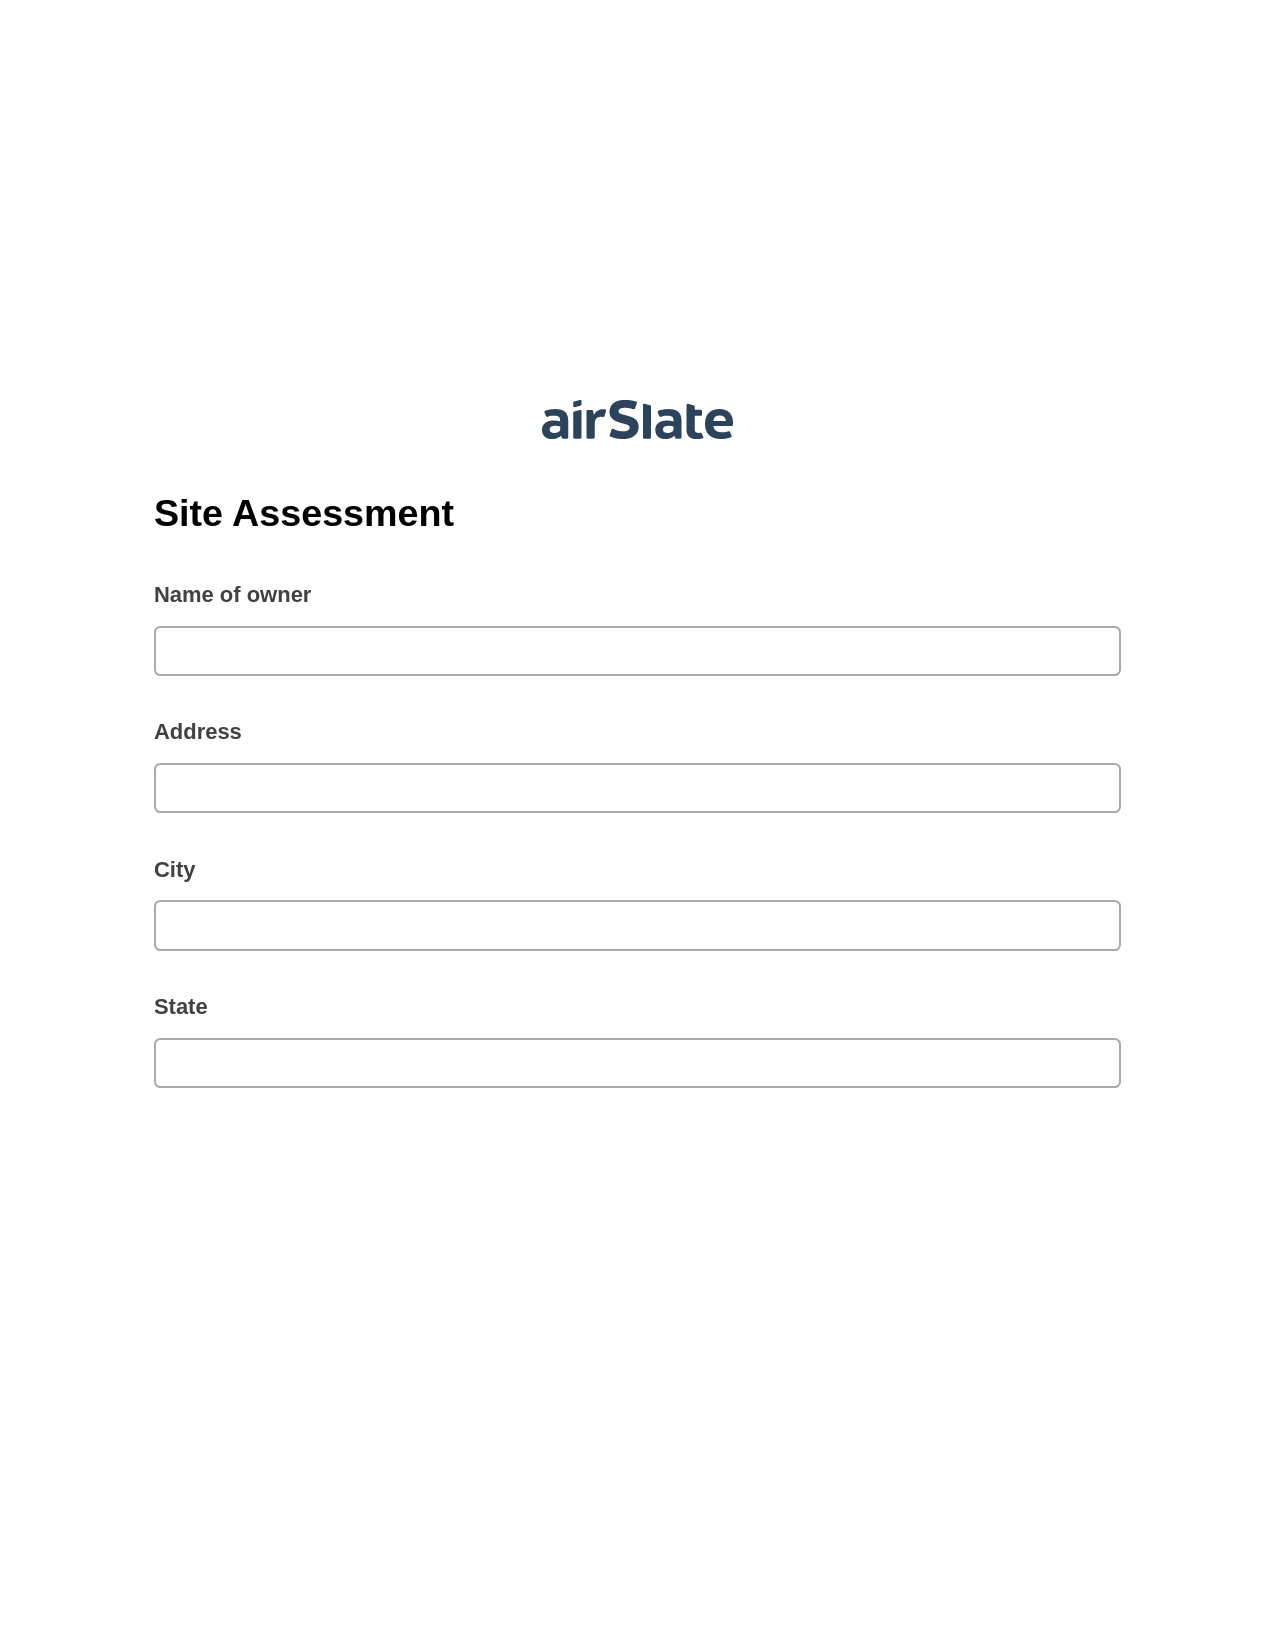 Site Assessment Pre-fill from Office 365 Excel Bot, Revoke Access Bot, Export to Google Sheet Bot